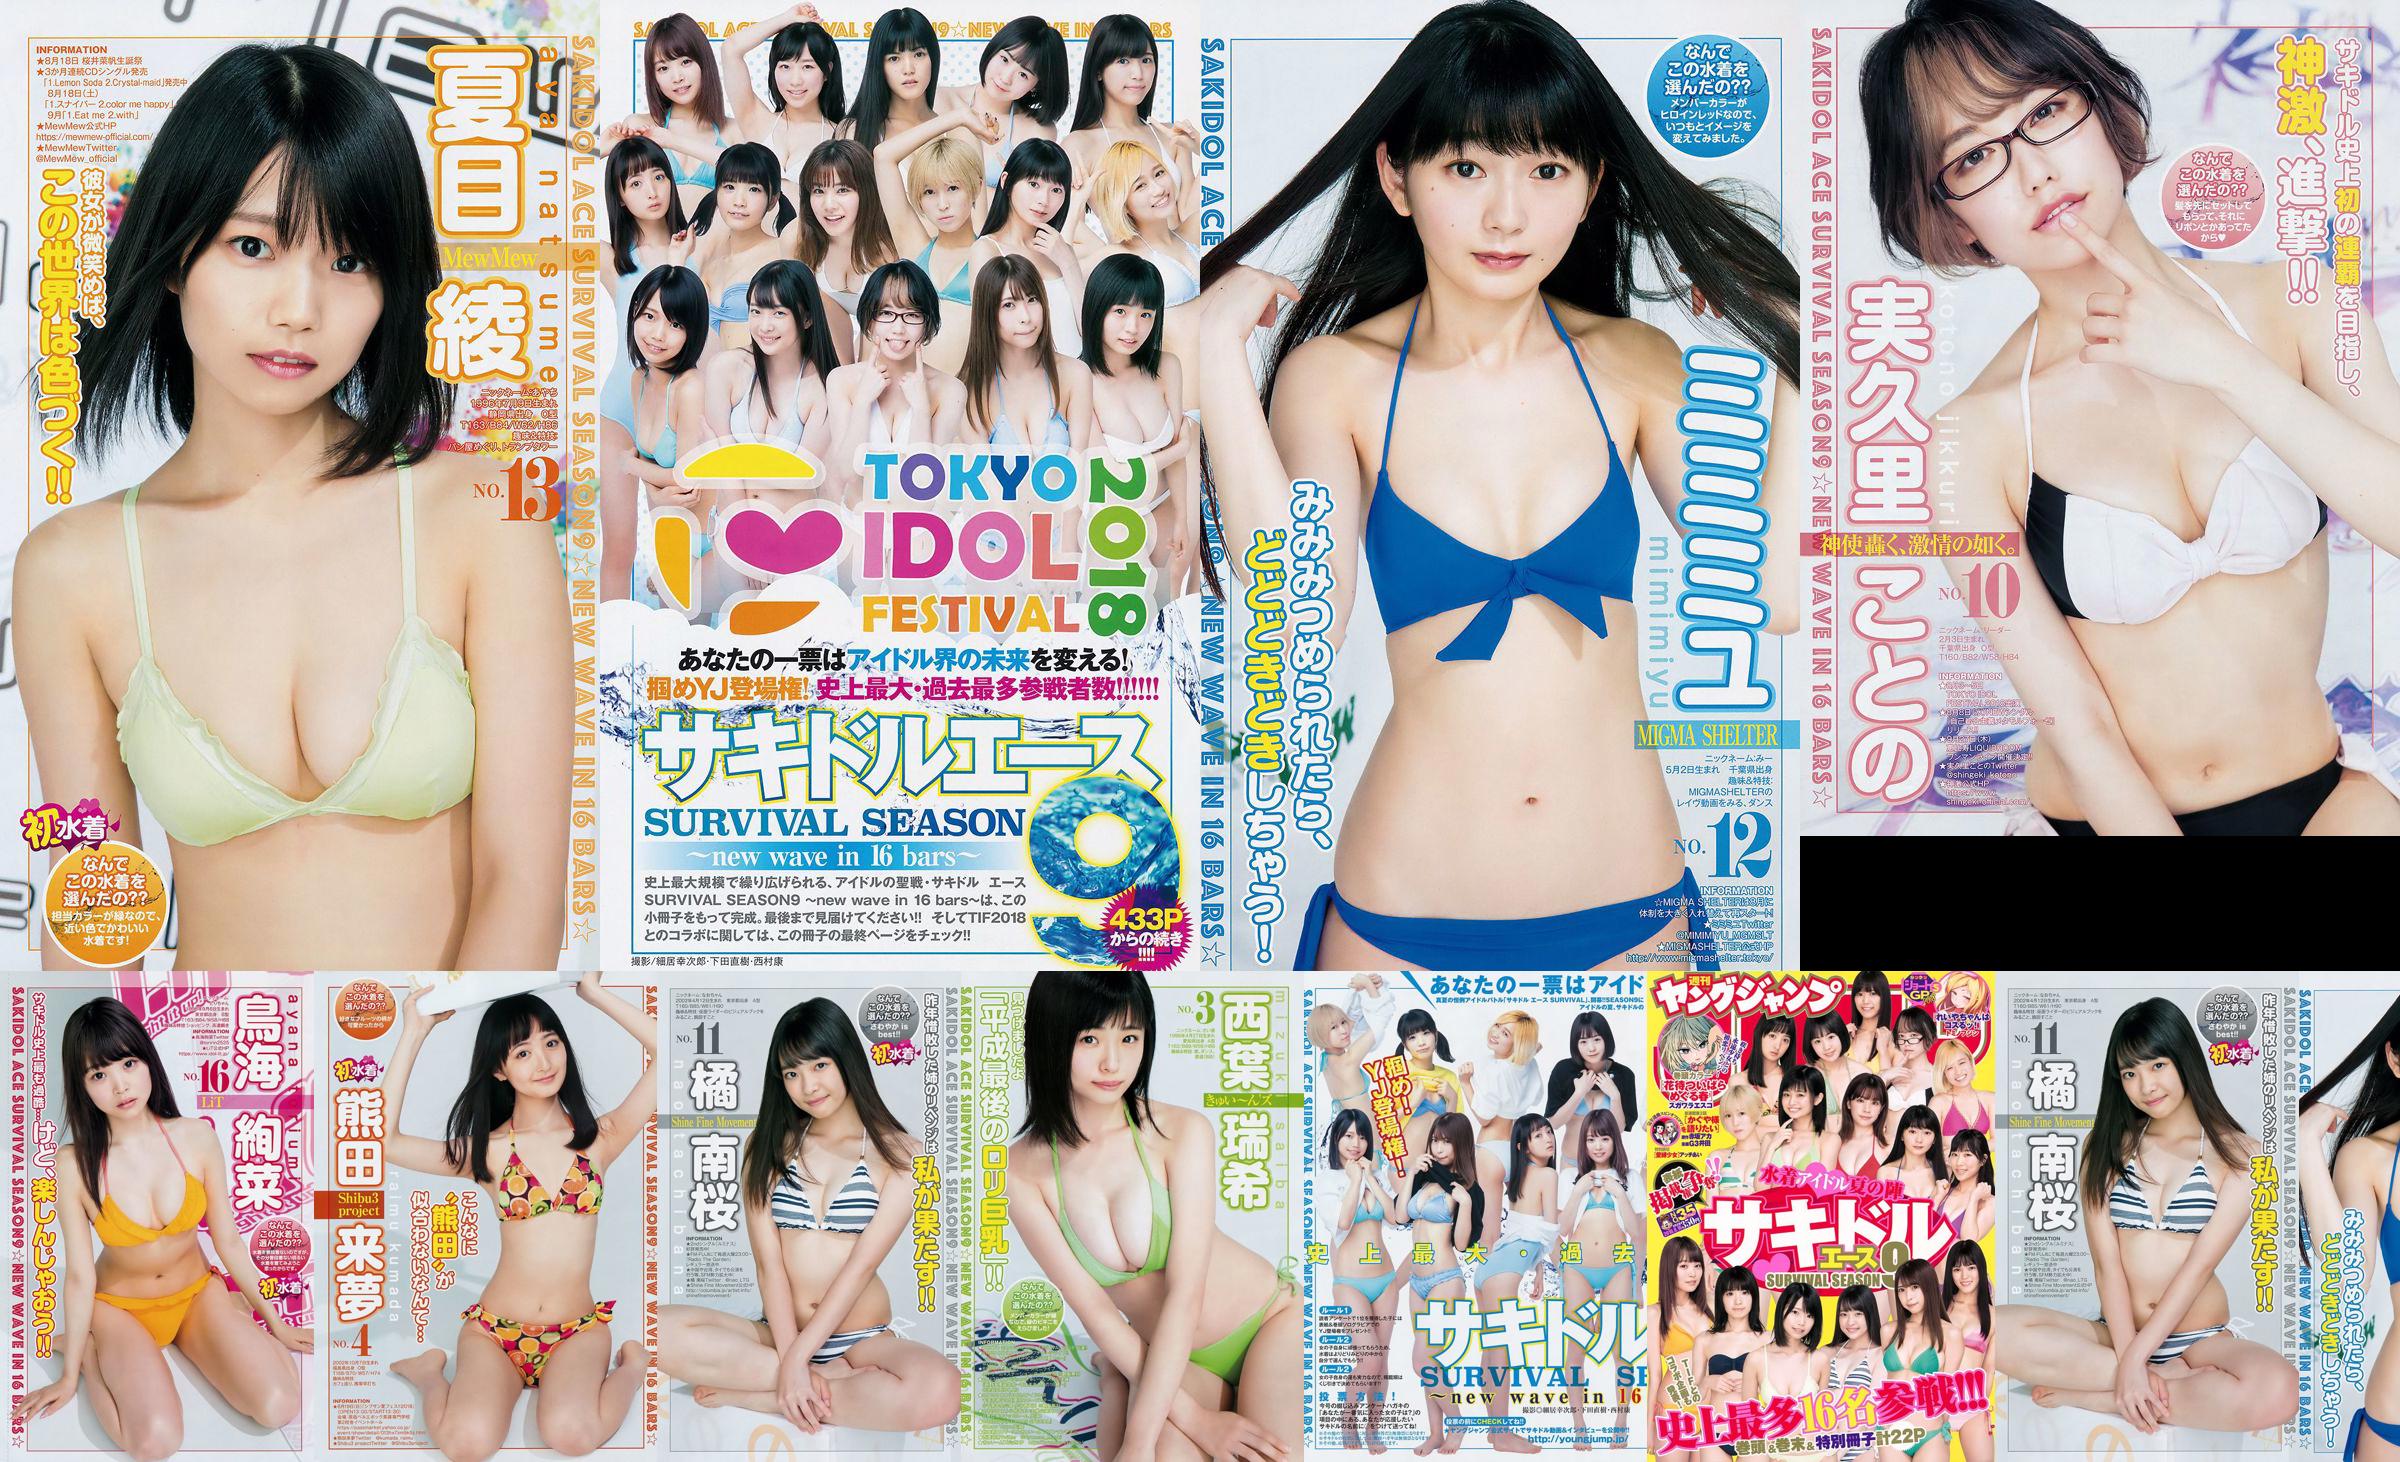 [FLASH] Ikumi Hisamatsu Risa Hirako Ren Ishikawa Angel Moe AKB48 Kaho Shibuya Misuzu Hayashi Ririka 2015.04.21 Photo Toshi No.ed6c8f Page 1